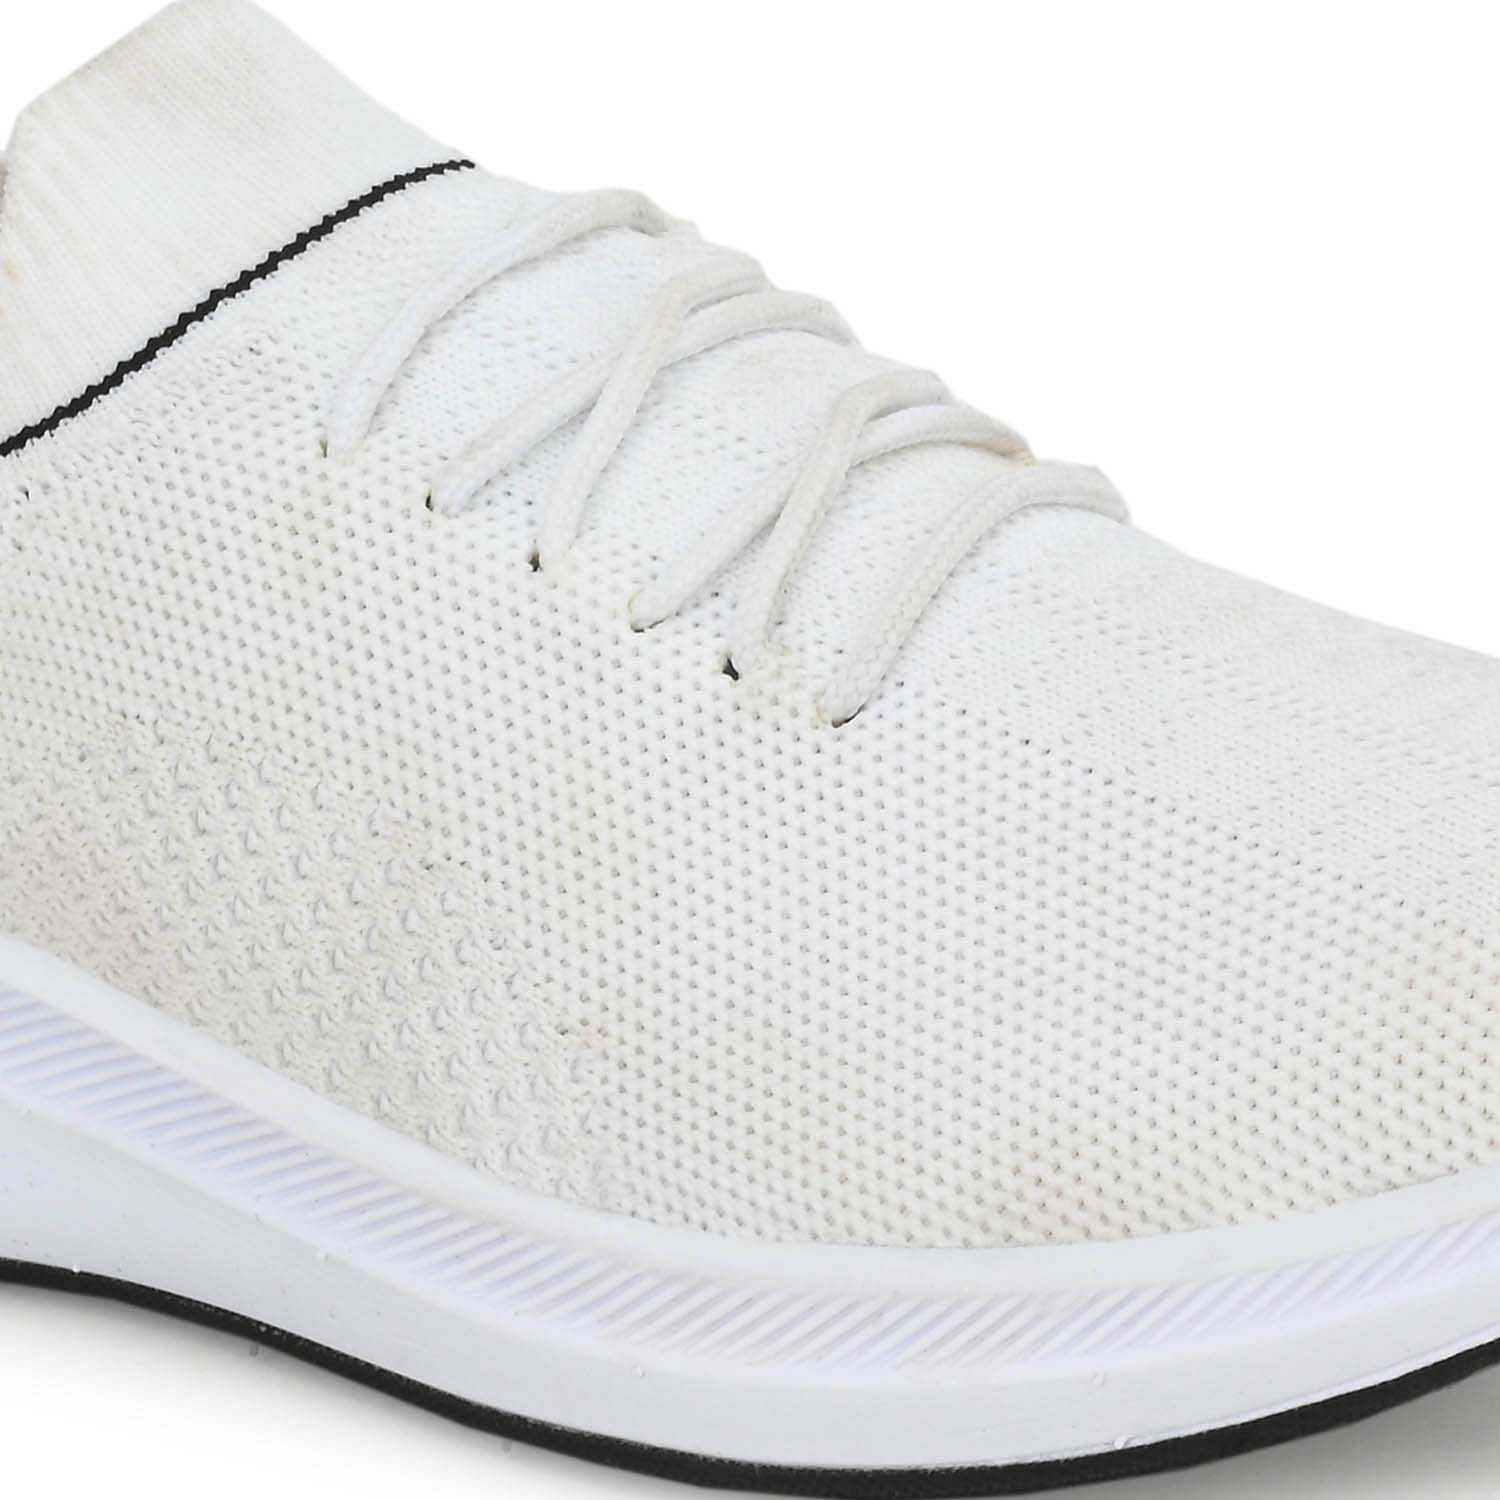 Pair-it Women's Sports Shoes-LZ-WMN SPORTS-003-White